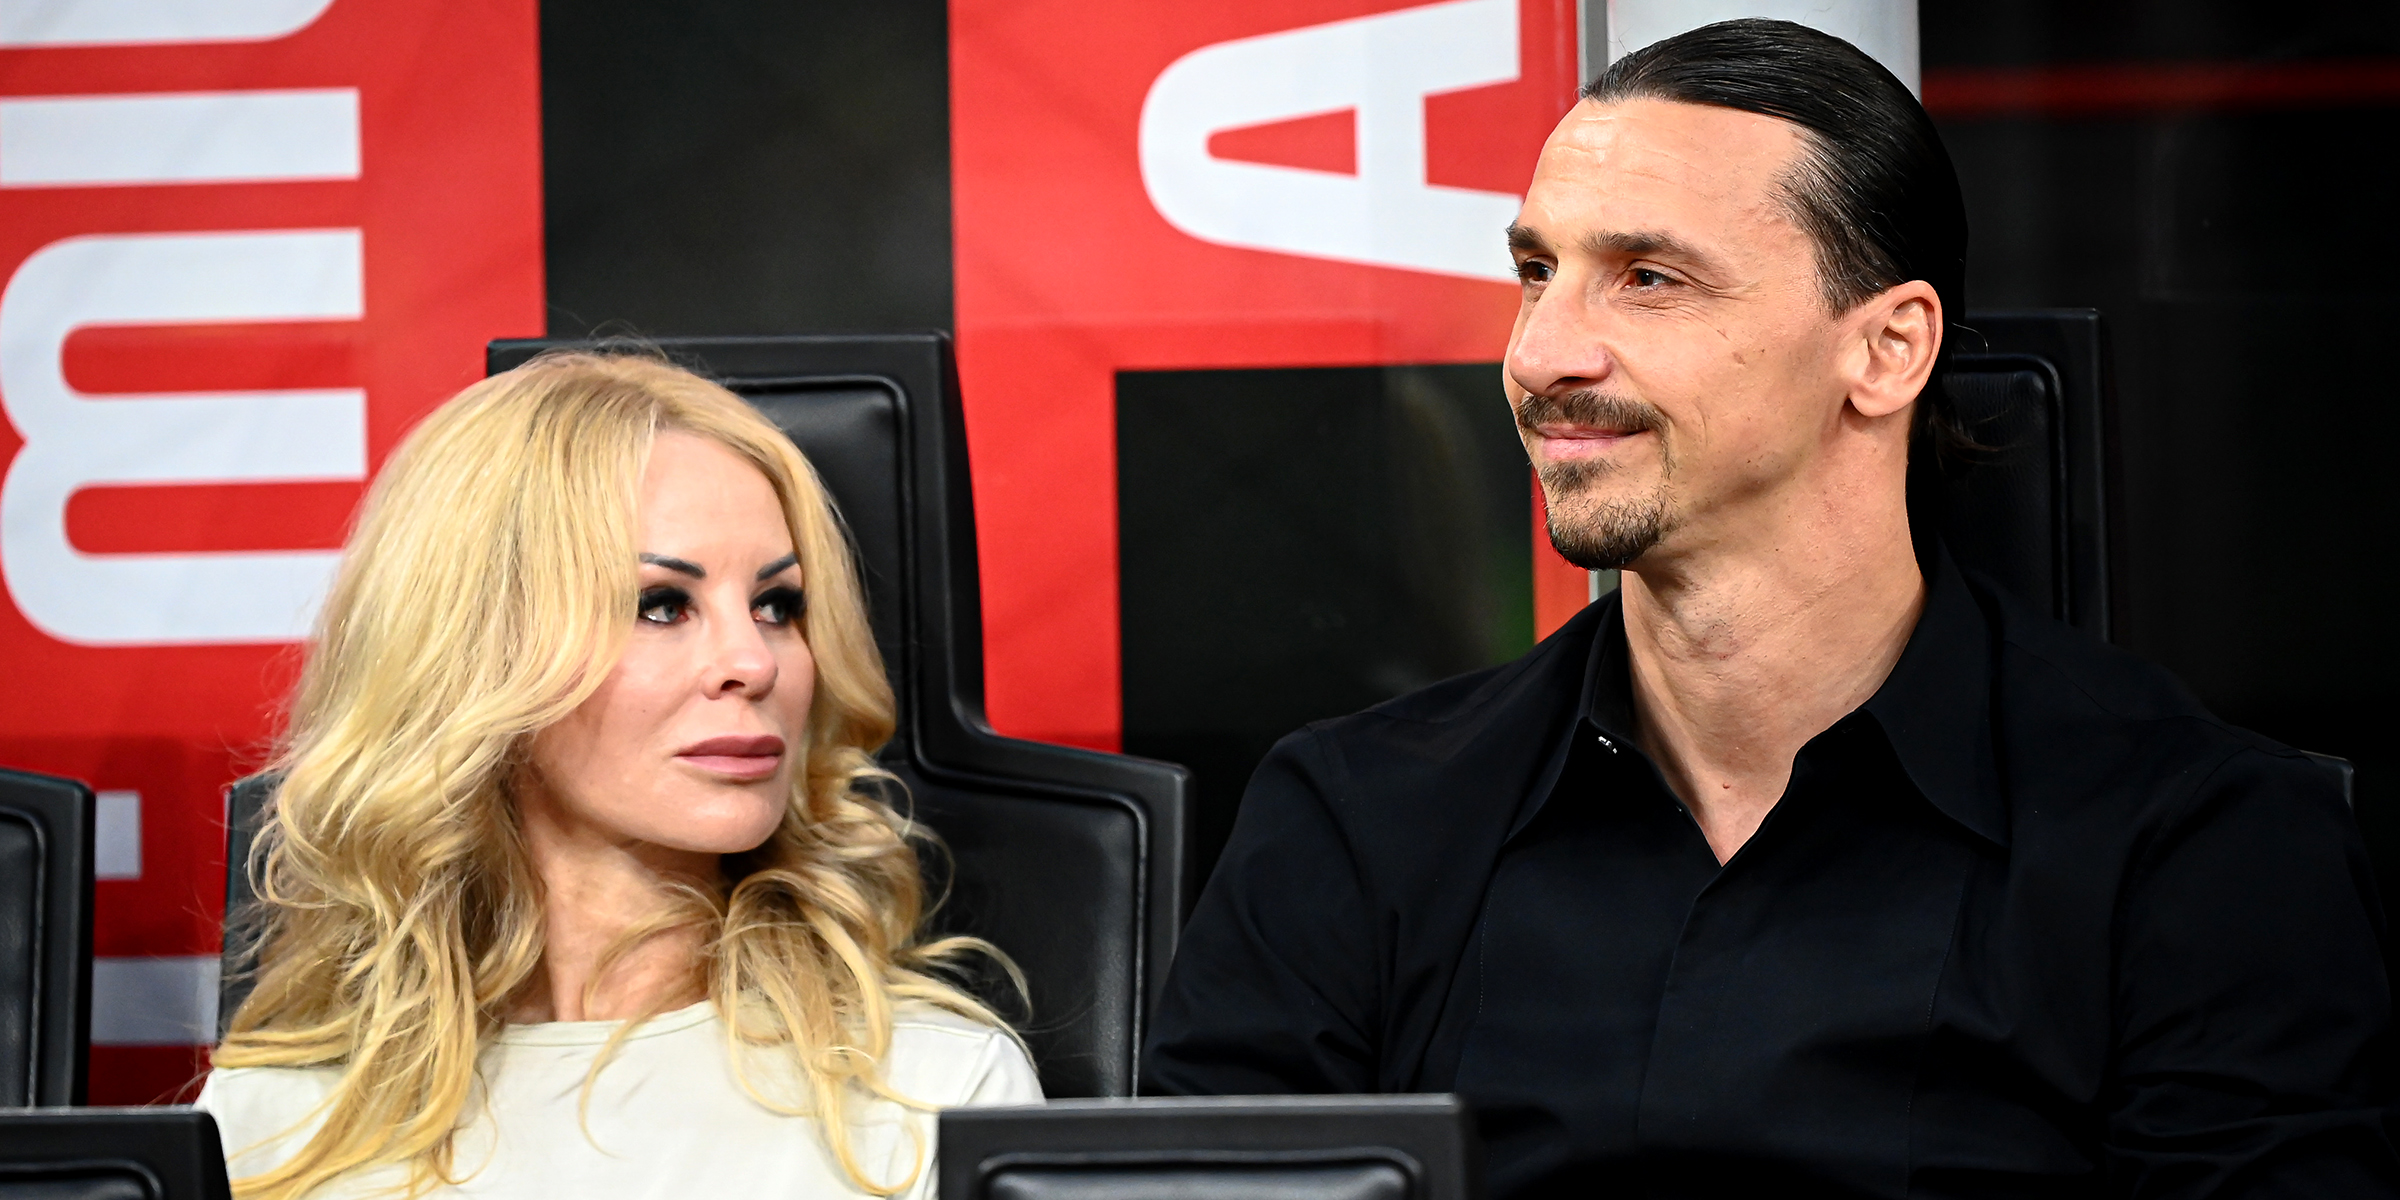 Helena Seger and Zlatan Ibrahimović | Source: Getty images